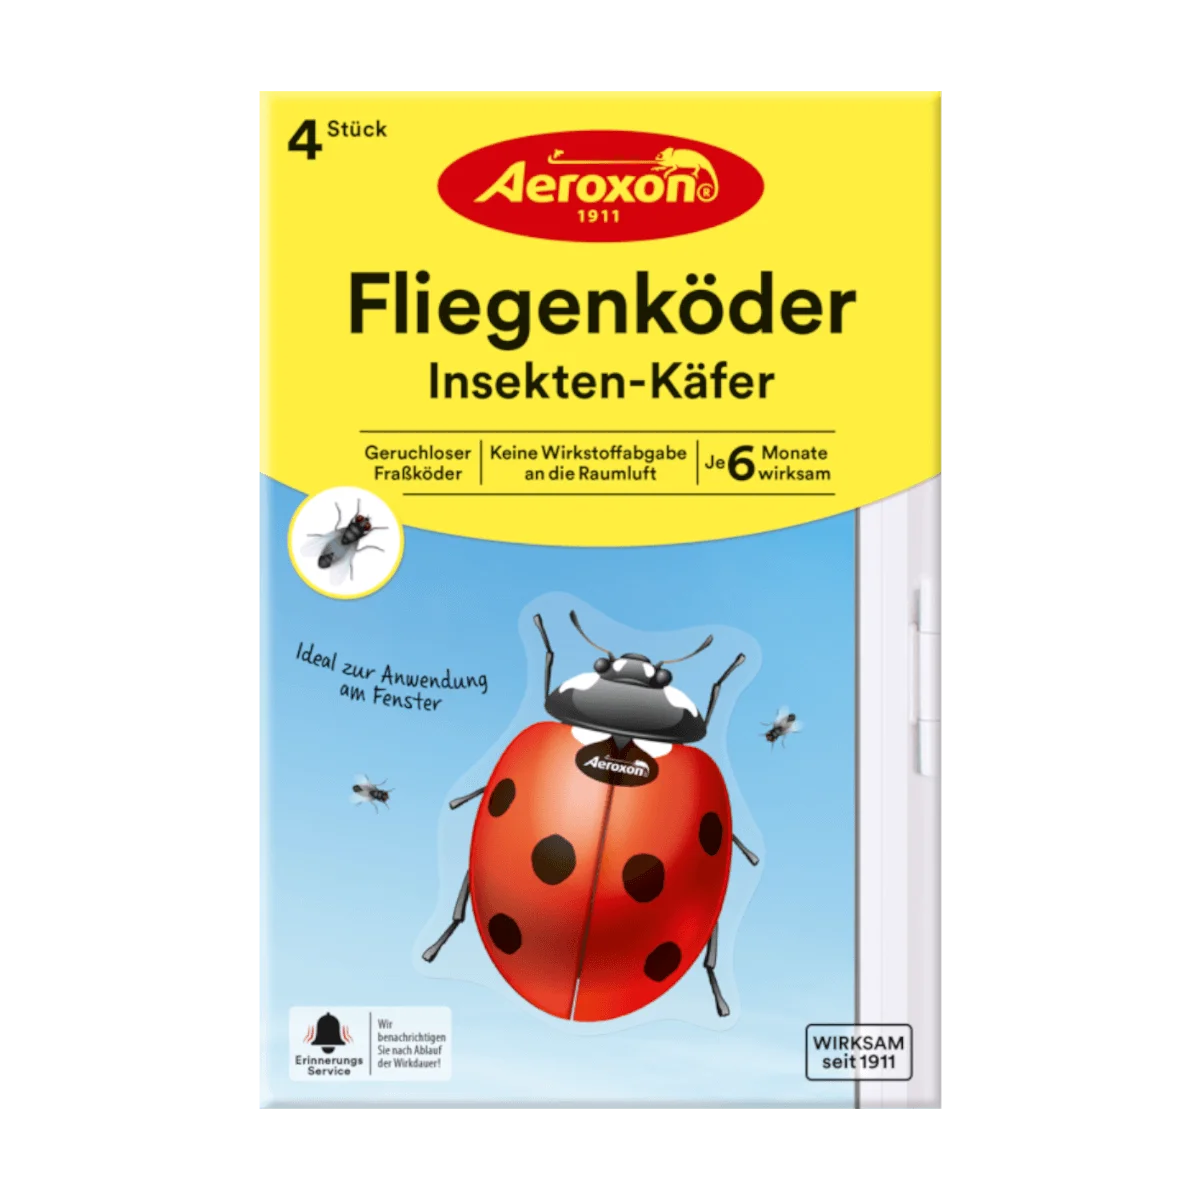 Aeroxon Fliegenköder Insekten-Käfer, 4 Stk